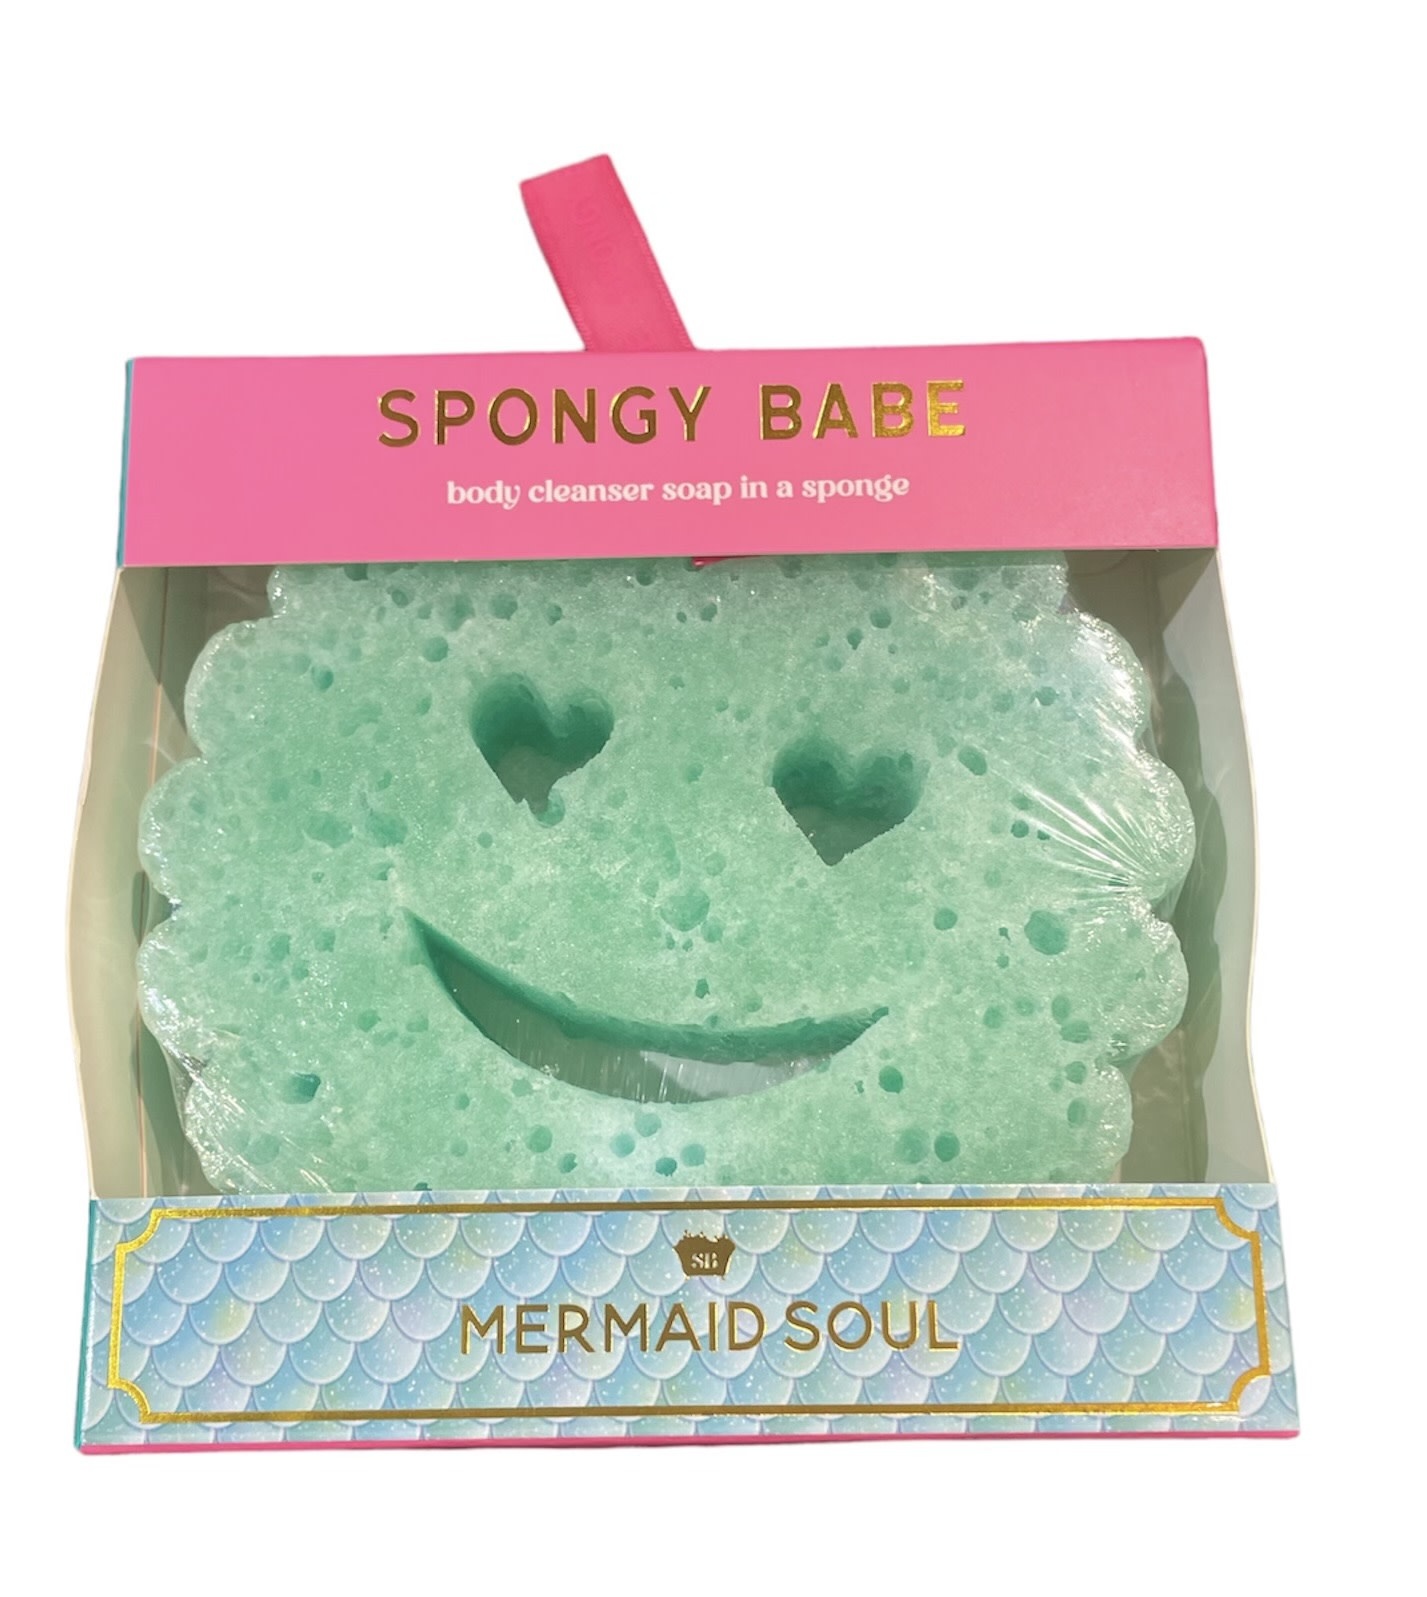 Caren Original Shower Sponge - SMILEY FACE (Seaside)